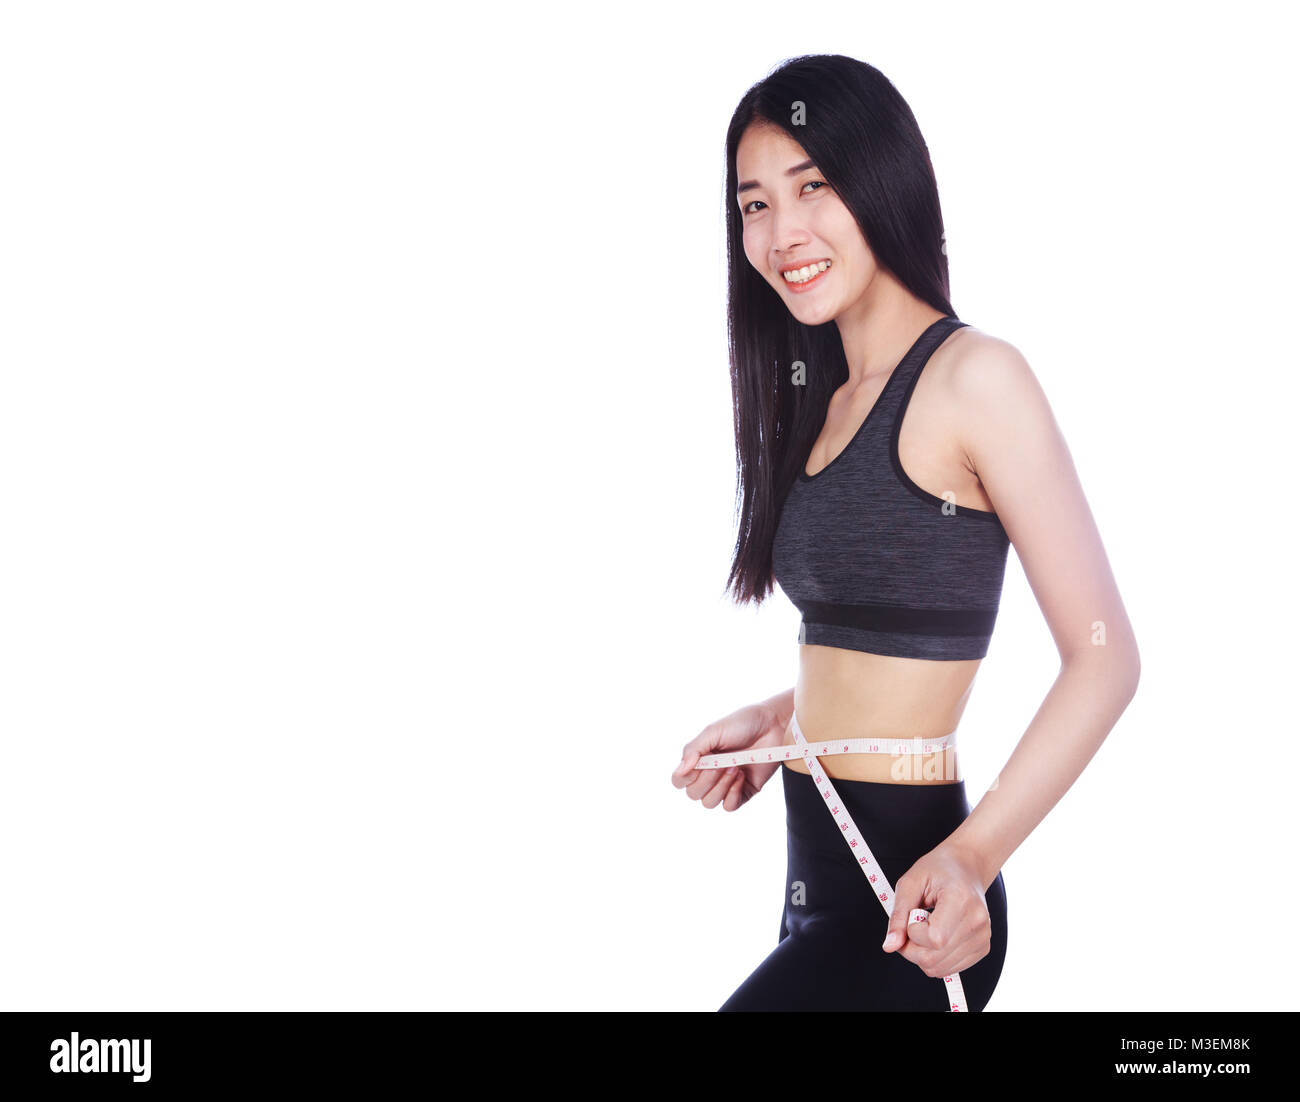 https://c8.alamy.com/comp/M3EM8K/woman-measuring-waist-with-tape-isolated-on-white-background-diet-M3EM8K.jpg